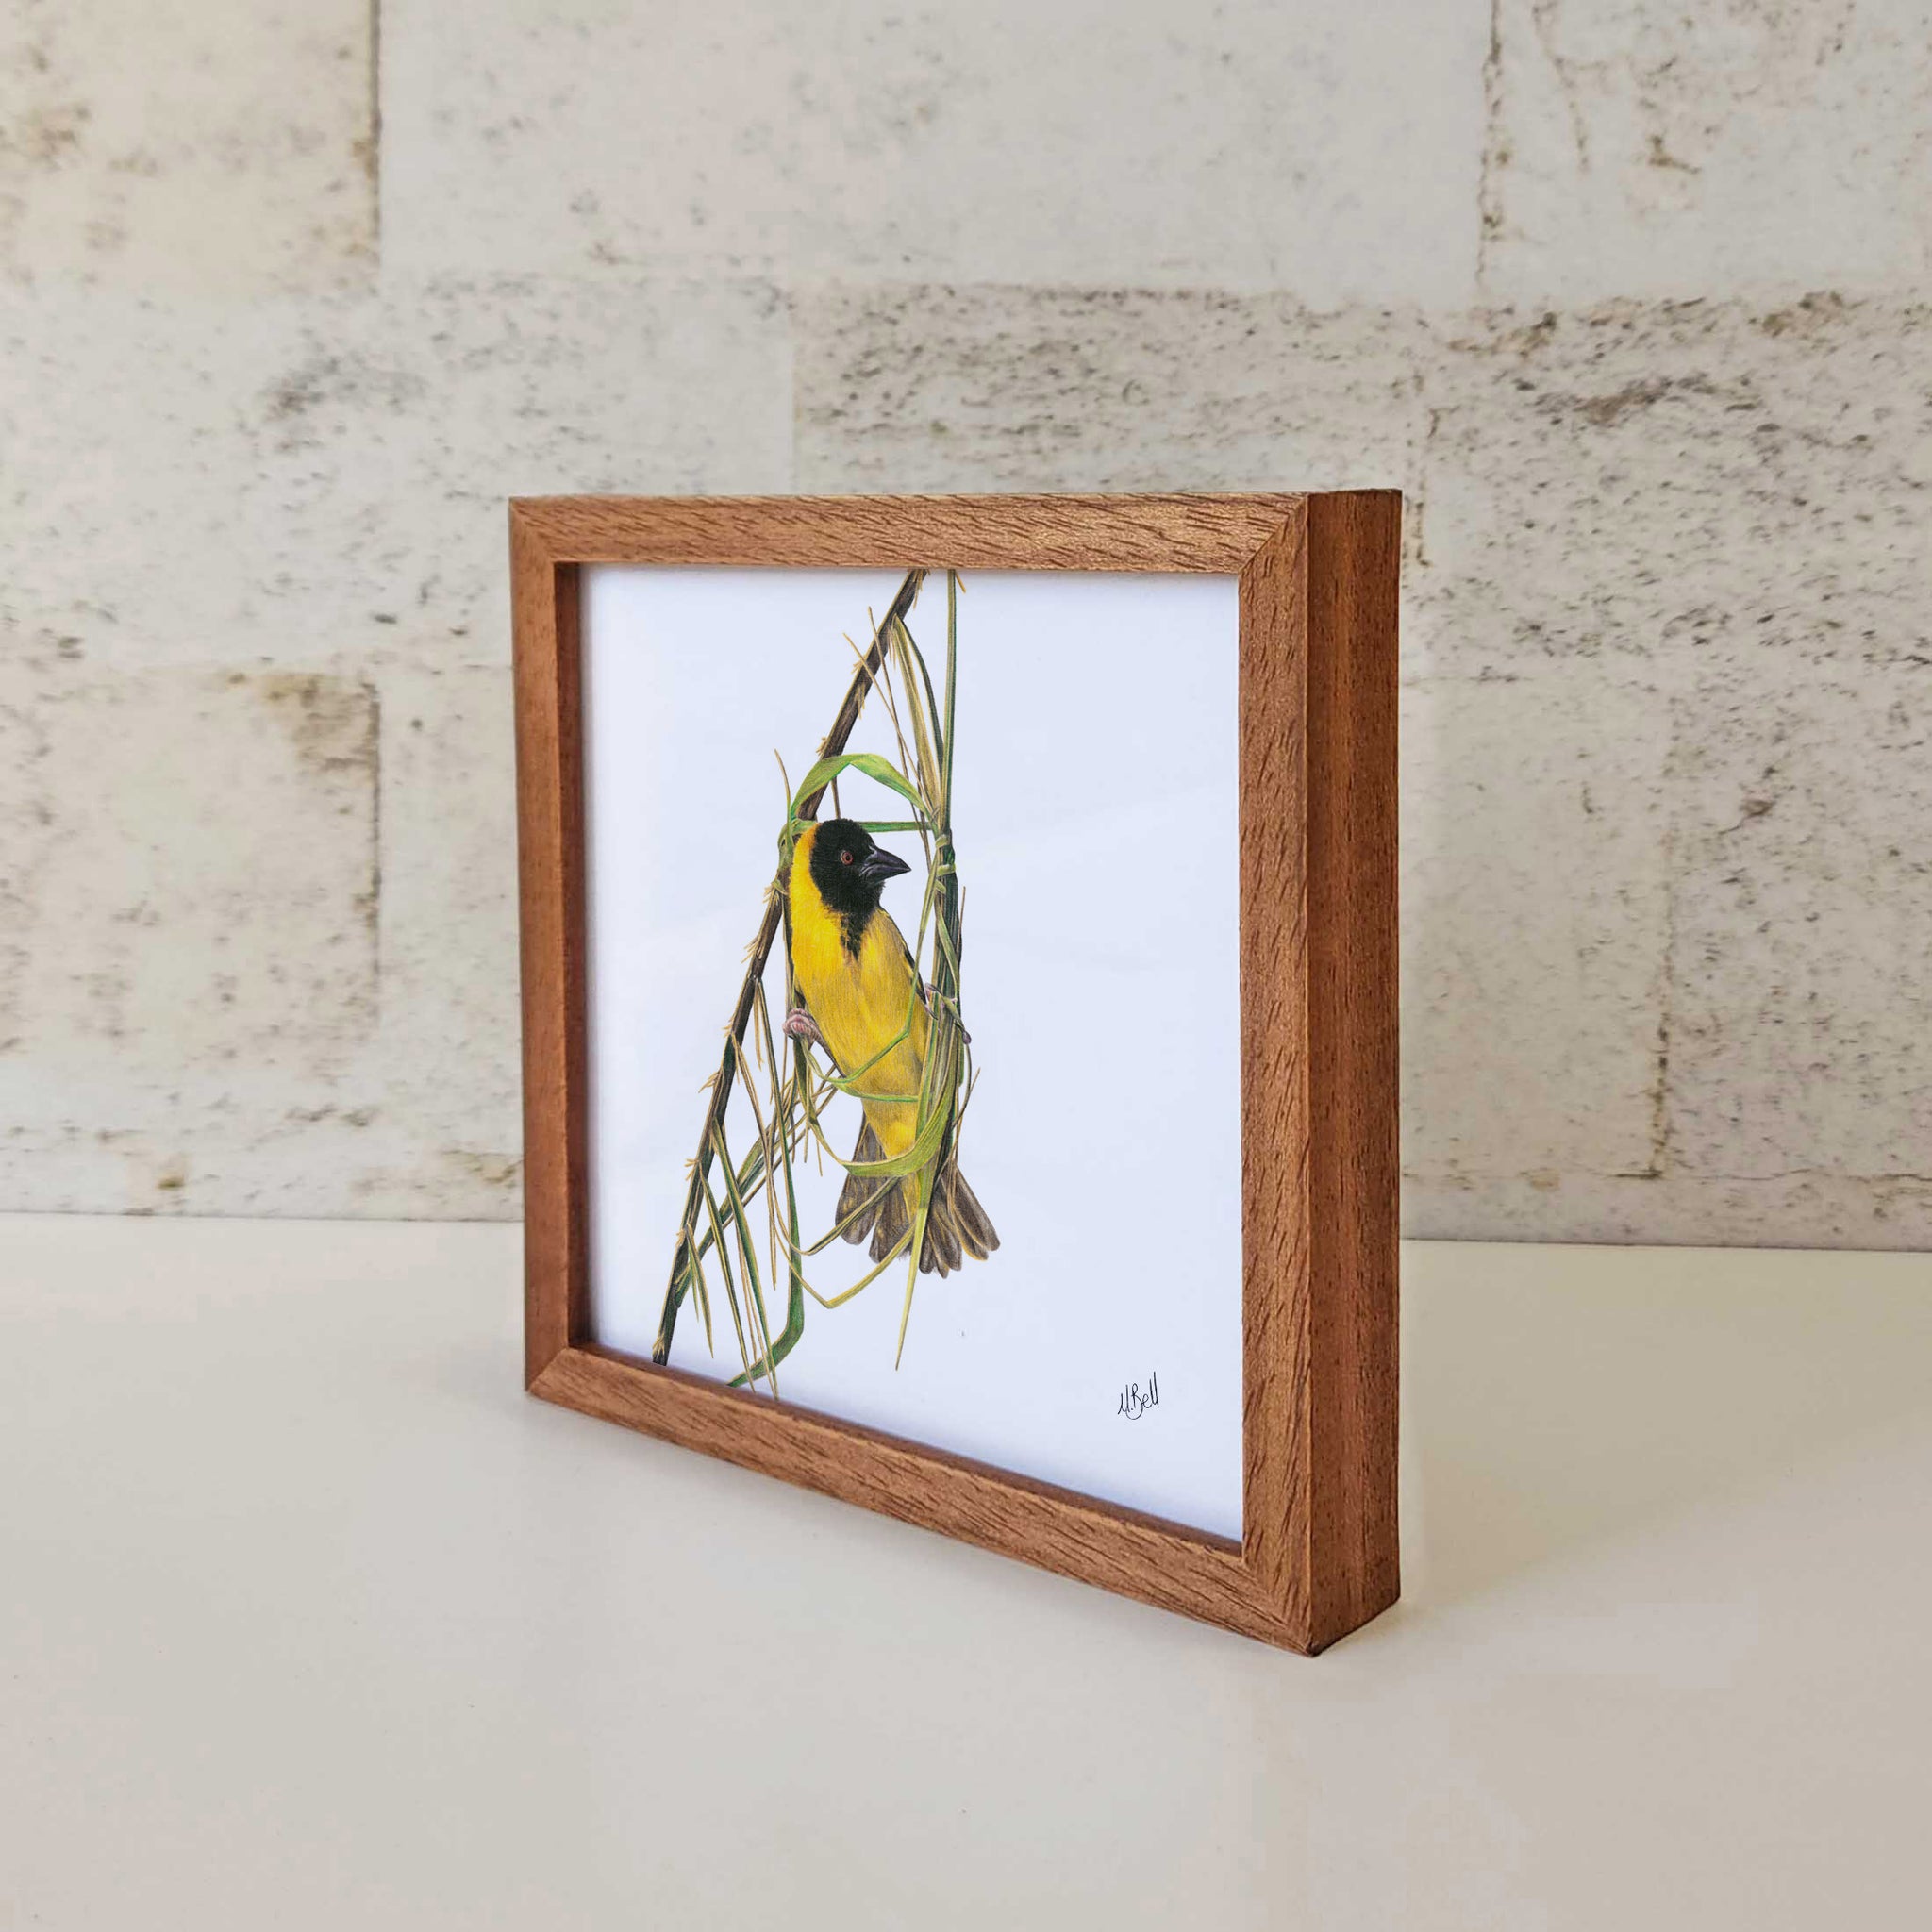 Kiaat wood framed miniature artwork of a Southern Masked Weaver, part of wildlife artist Matthew Bell's birds of South Africa gallery